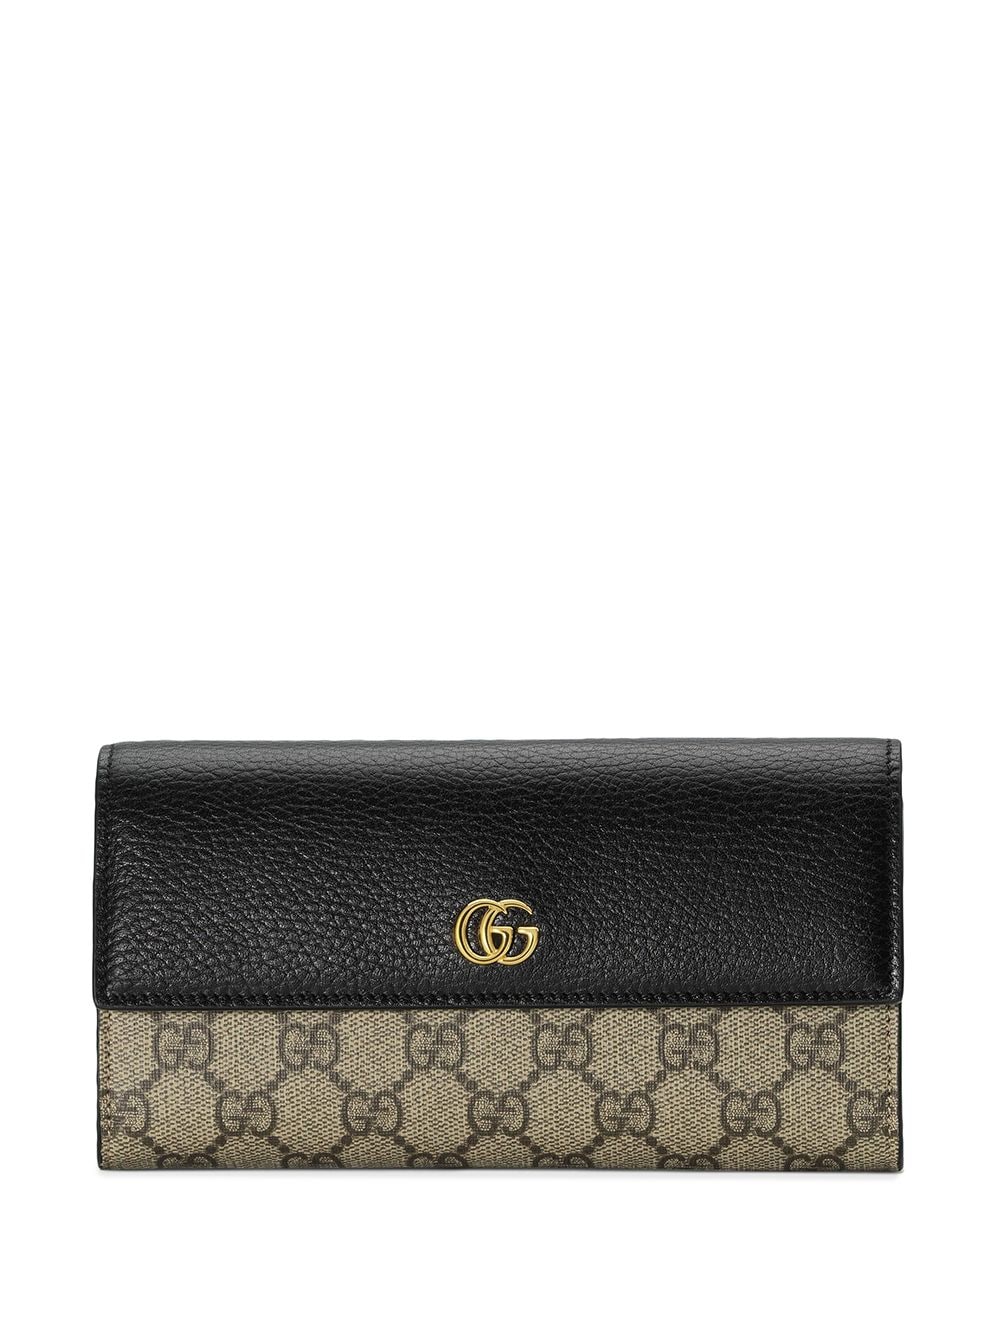 Gucci GG Marmont wallet case - Neutrals